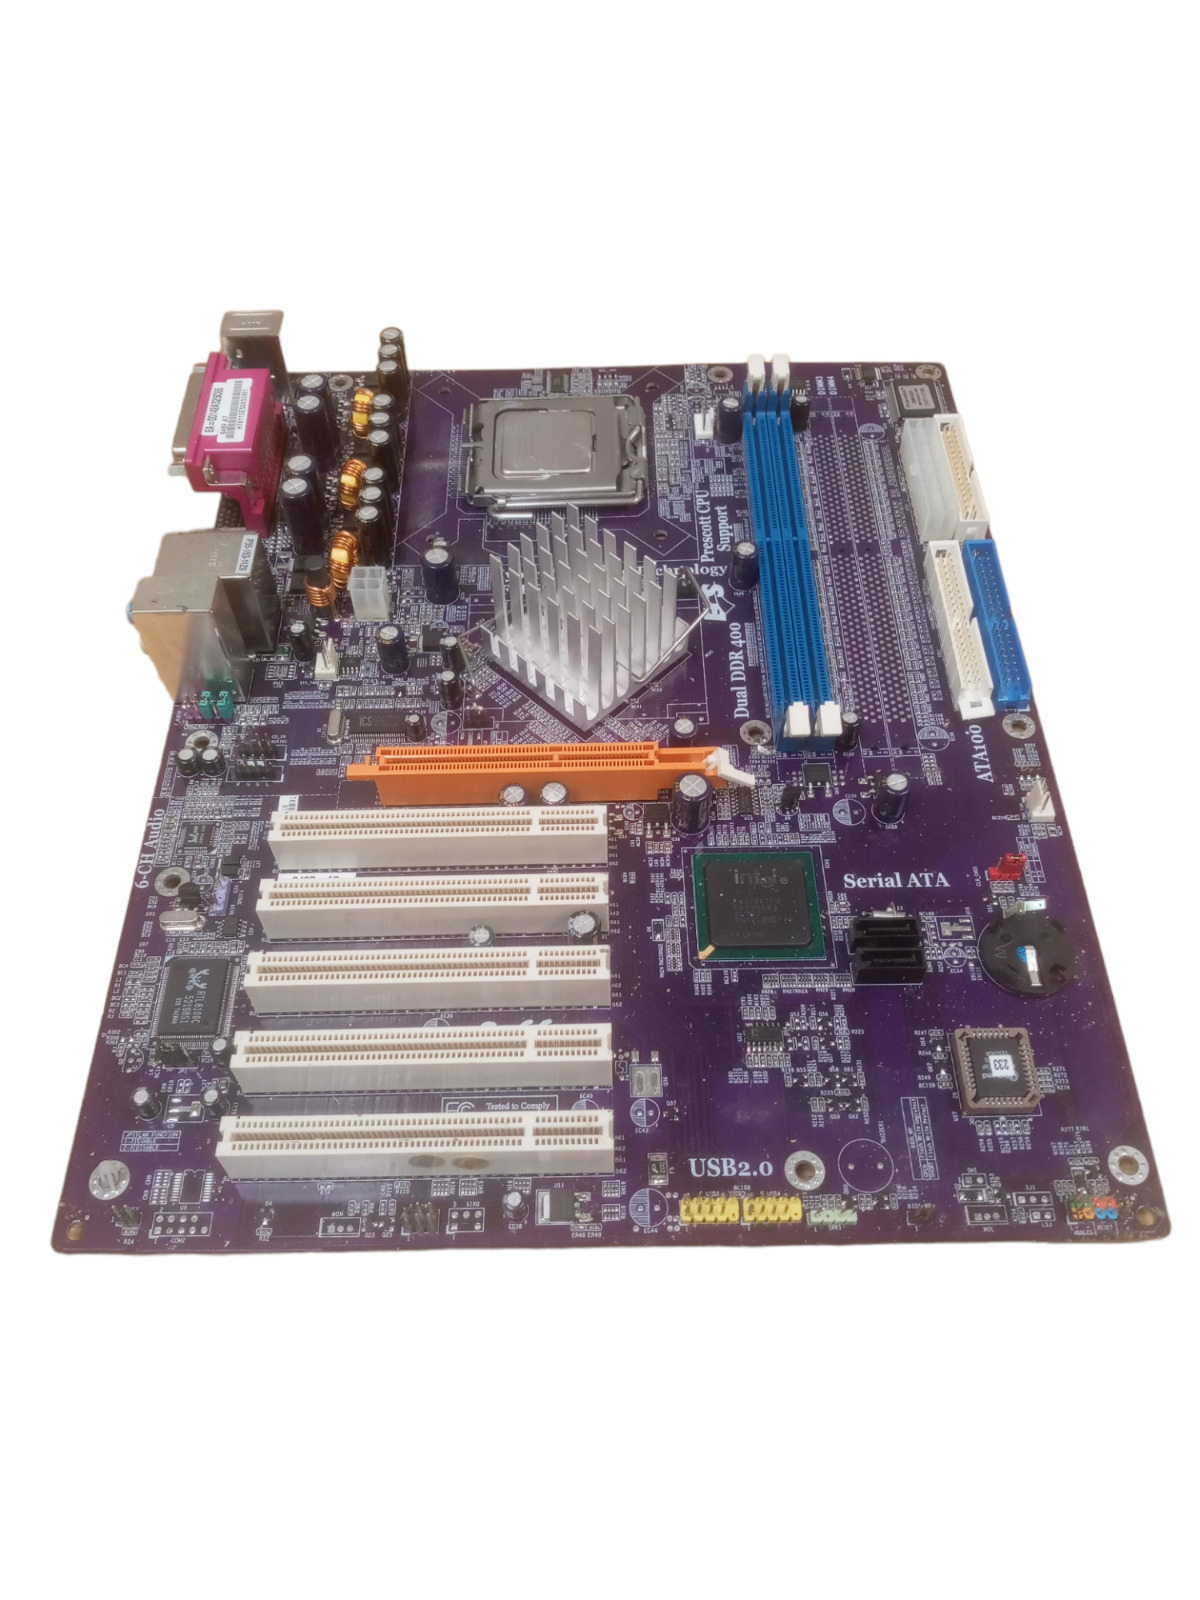 ECS 848P-A7 LGA775 Socket T Motherboard W/ SL8J8 CPU No I/O Shield Tested Works